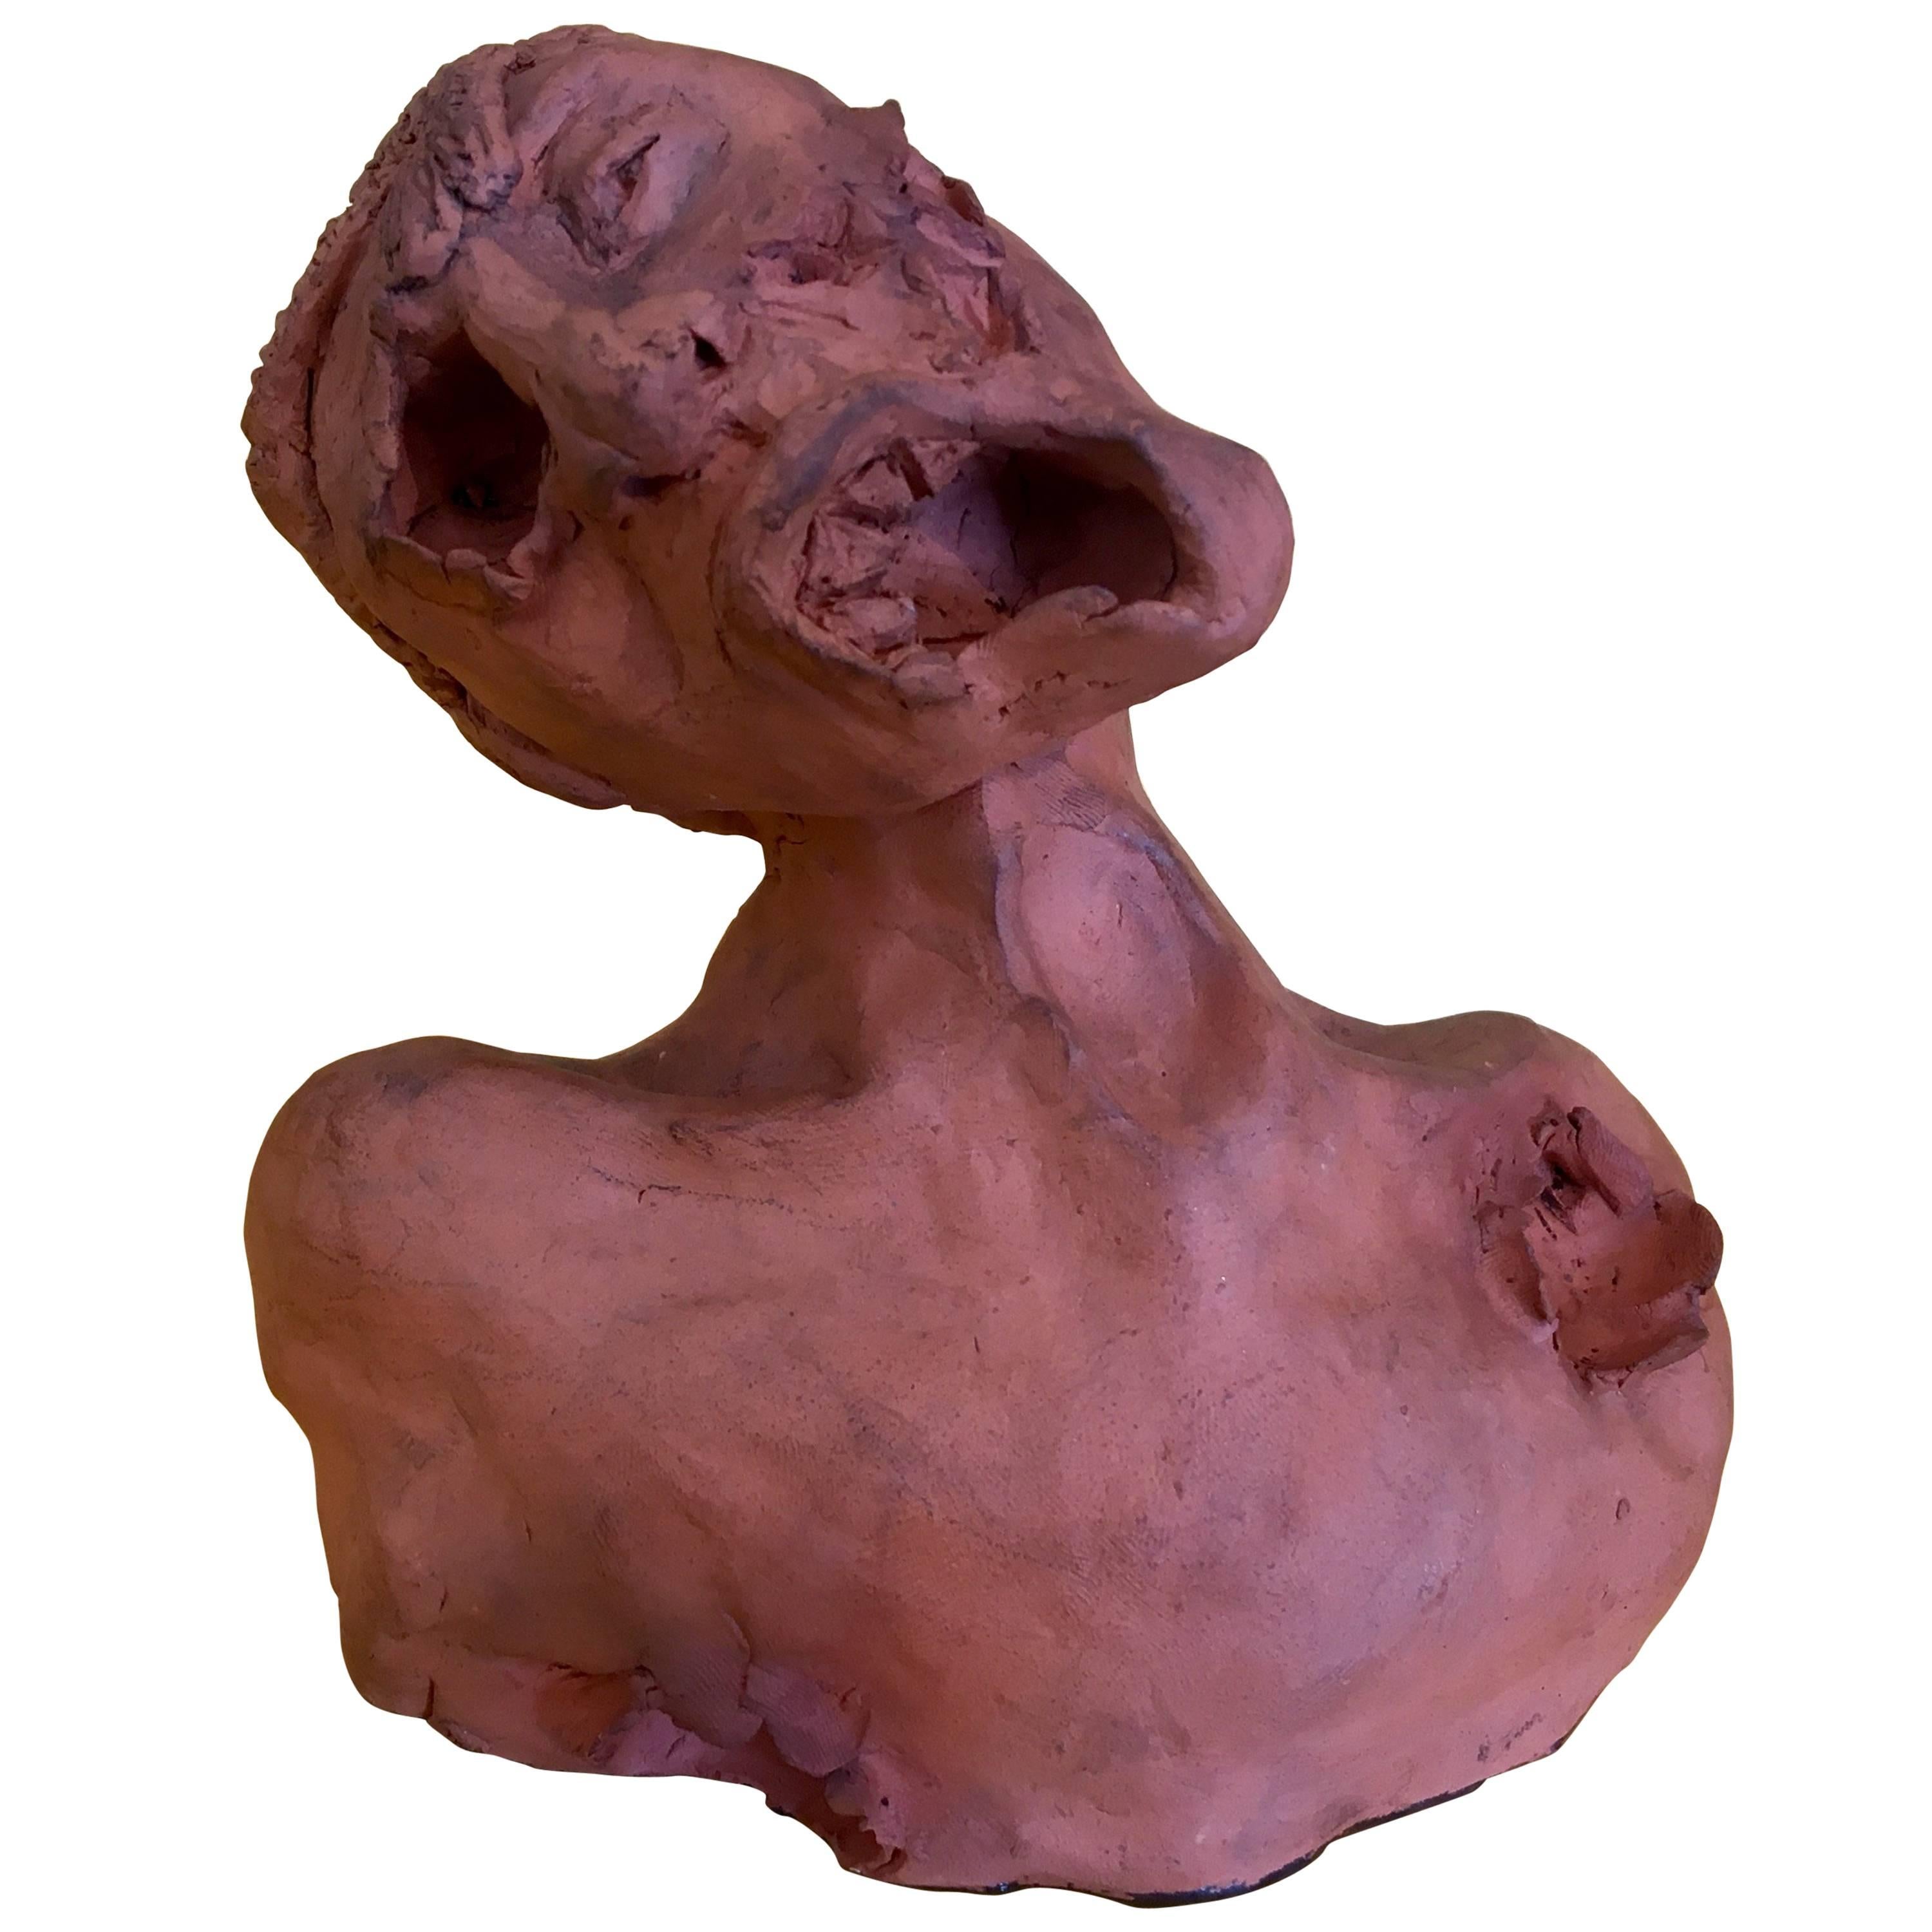 Striking Grotesque Ceramic Human Sculpture Signed J.W